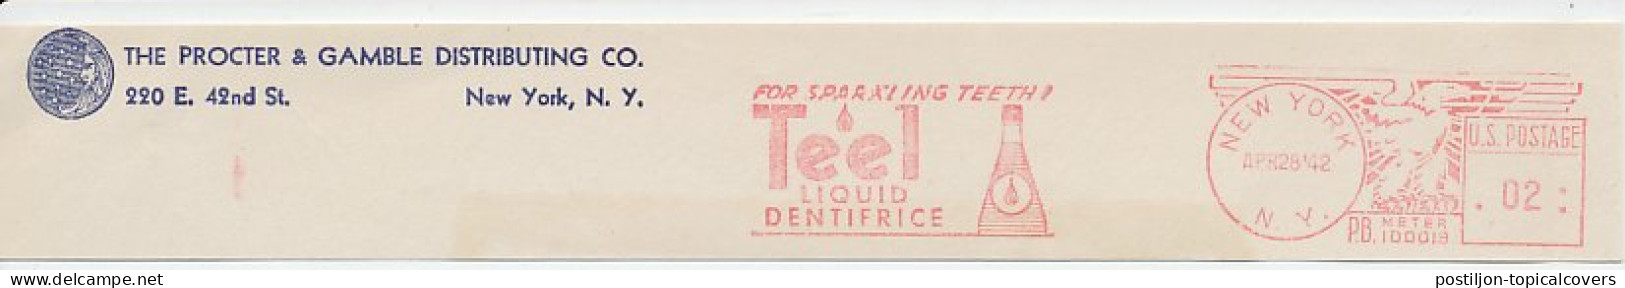 Meter Top Cut USA 1942 Liquid Dentifrice - Teel - Medizin